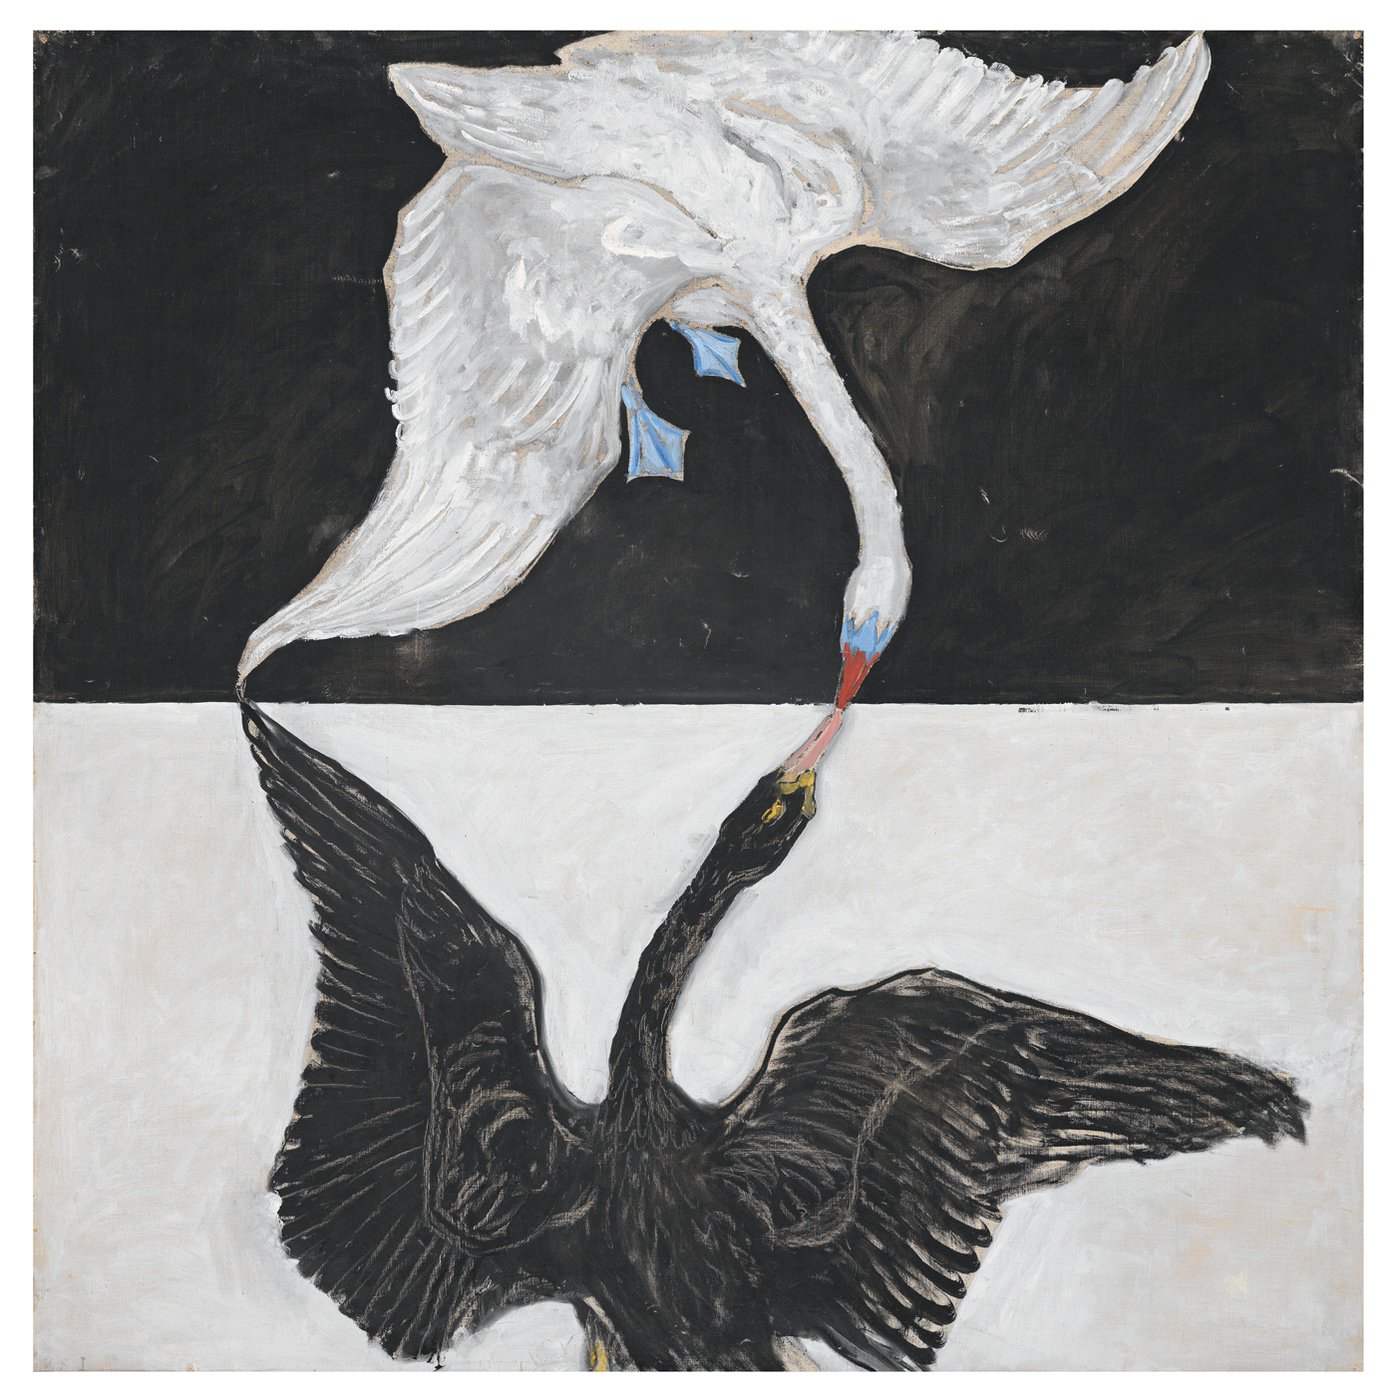 IX. csoport, SUW, A hattyú, No. 1 by Hilma af Klint - 1915 